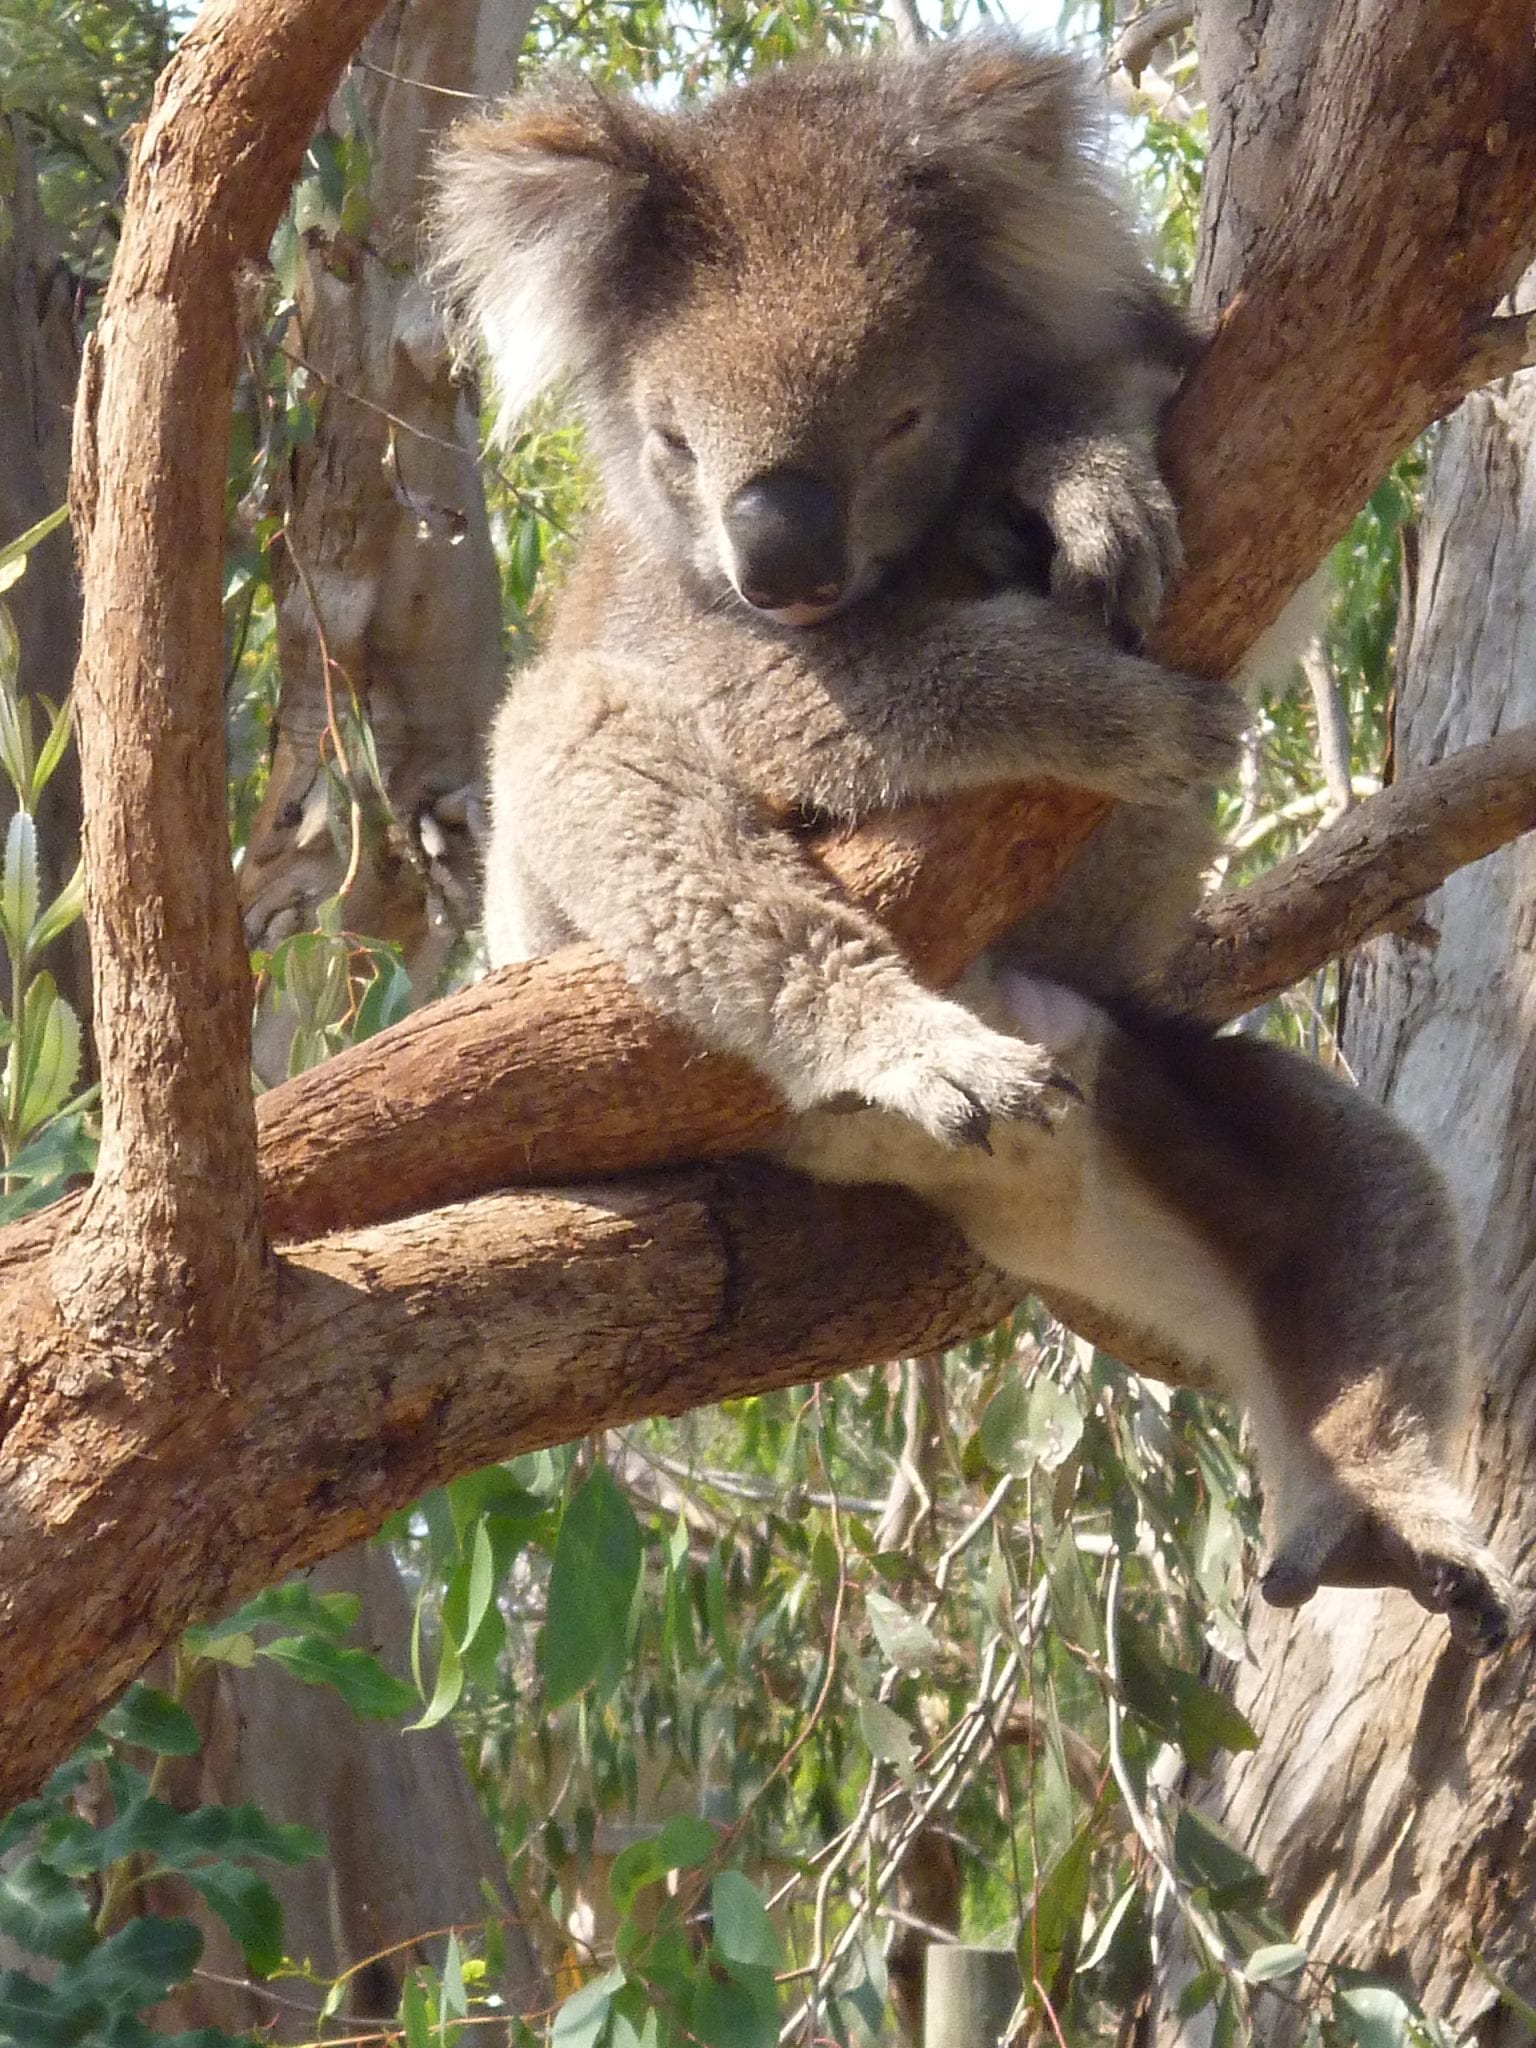 Melbourne Moonlit Sancturay-Victor the Koala